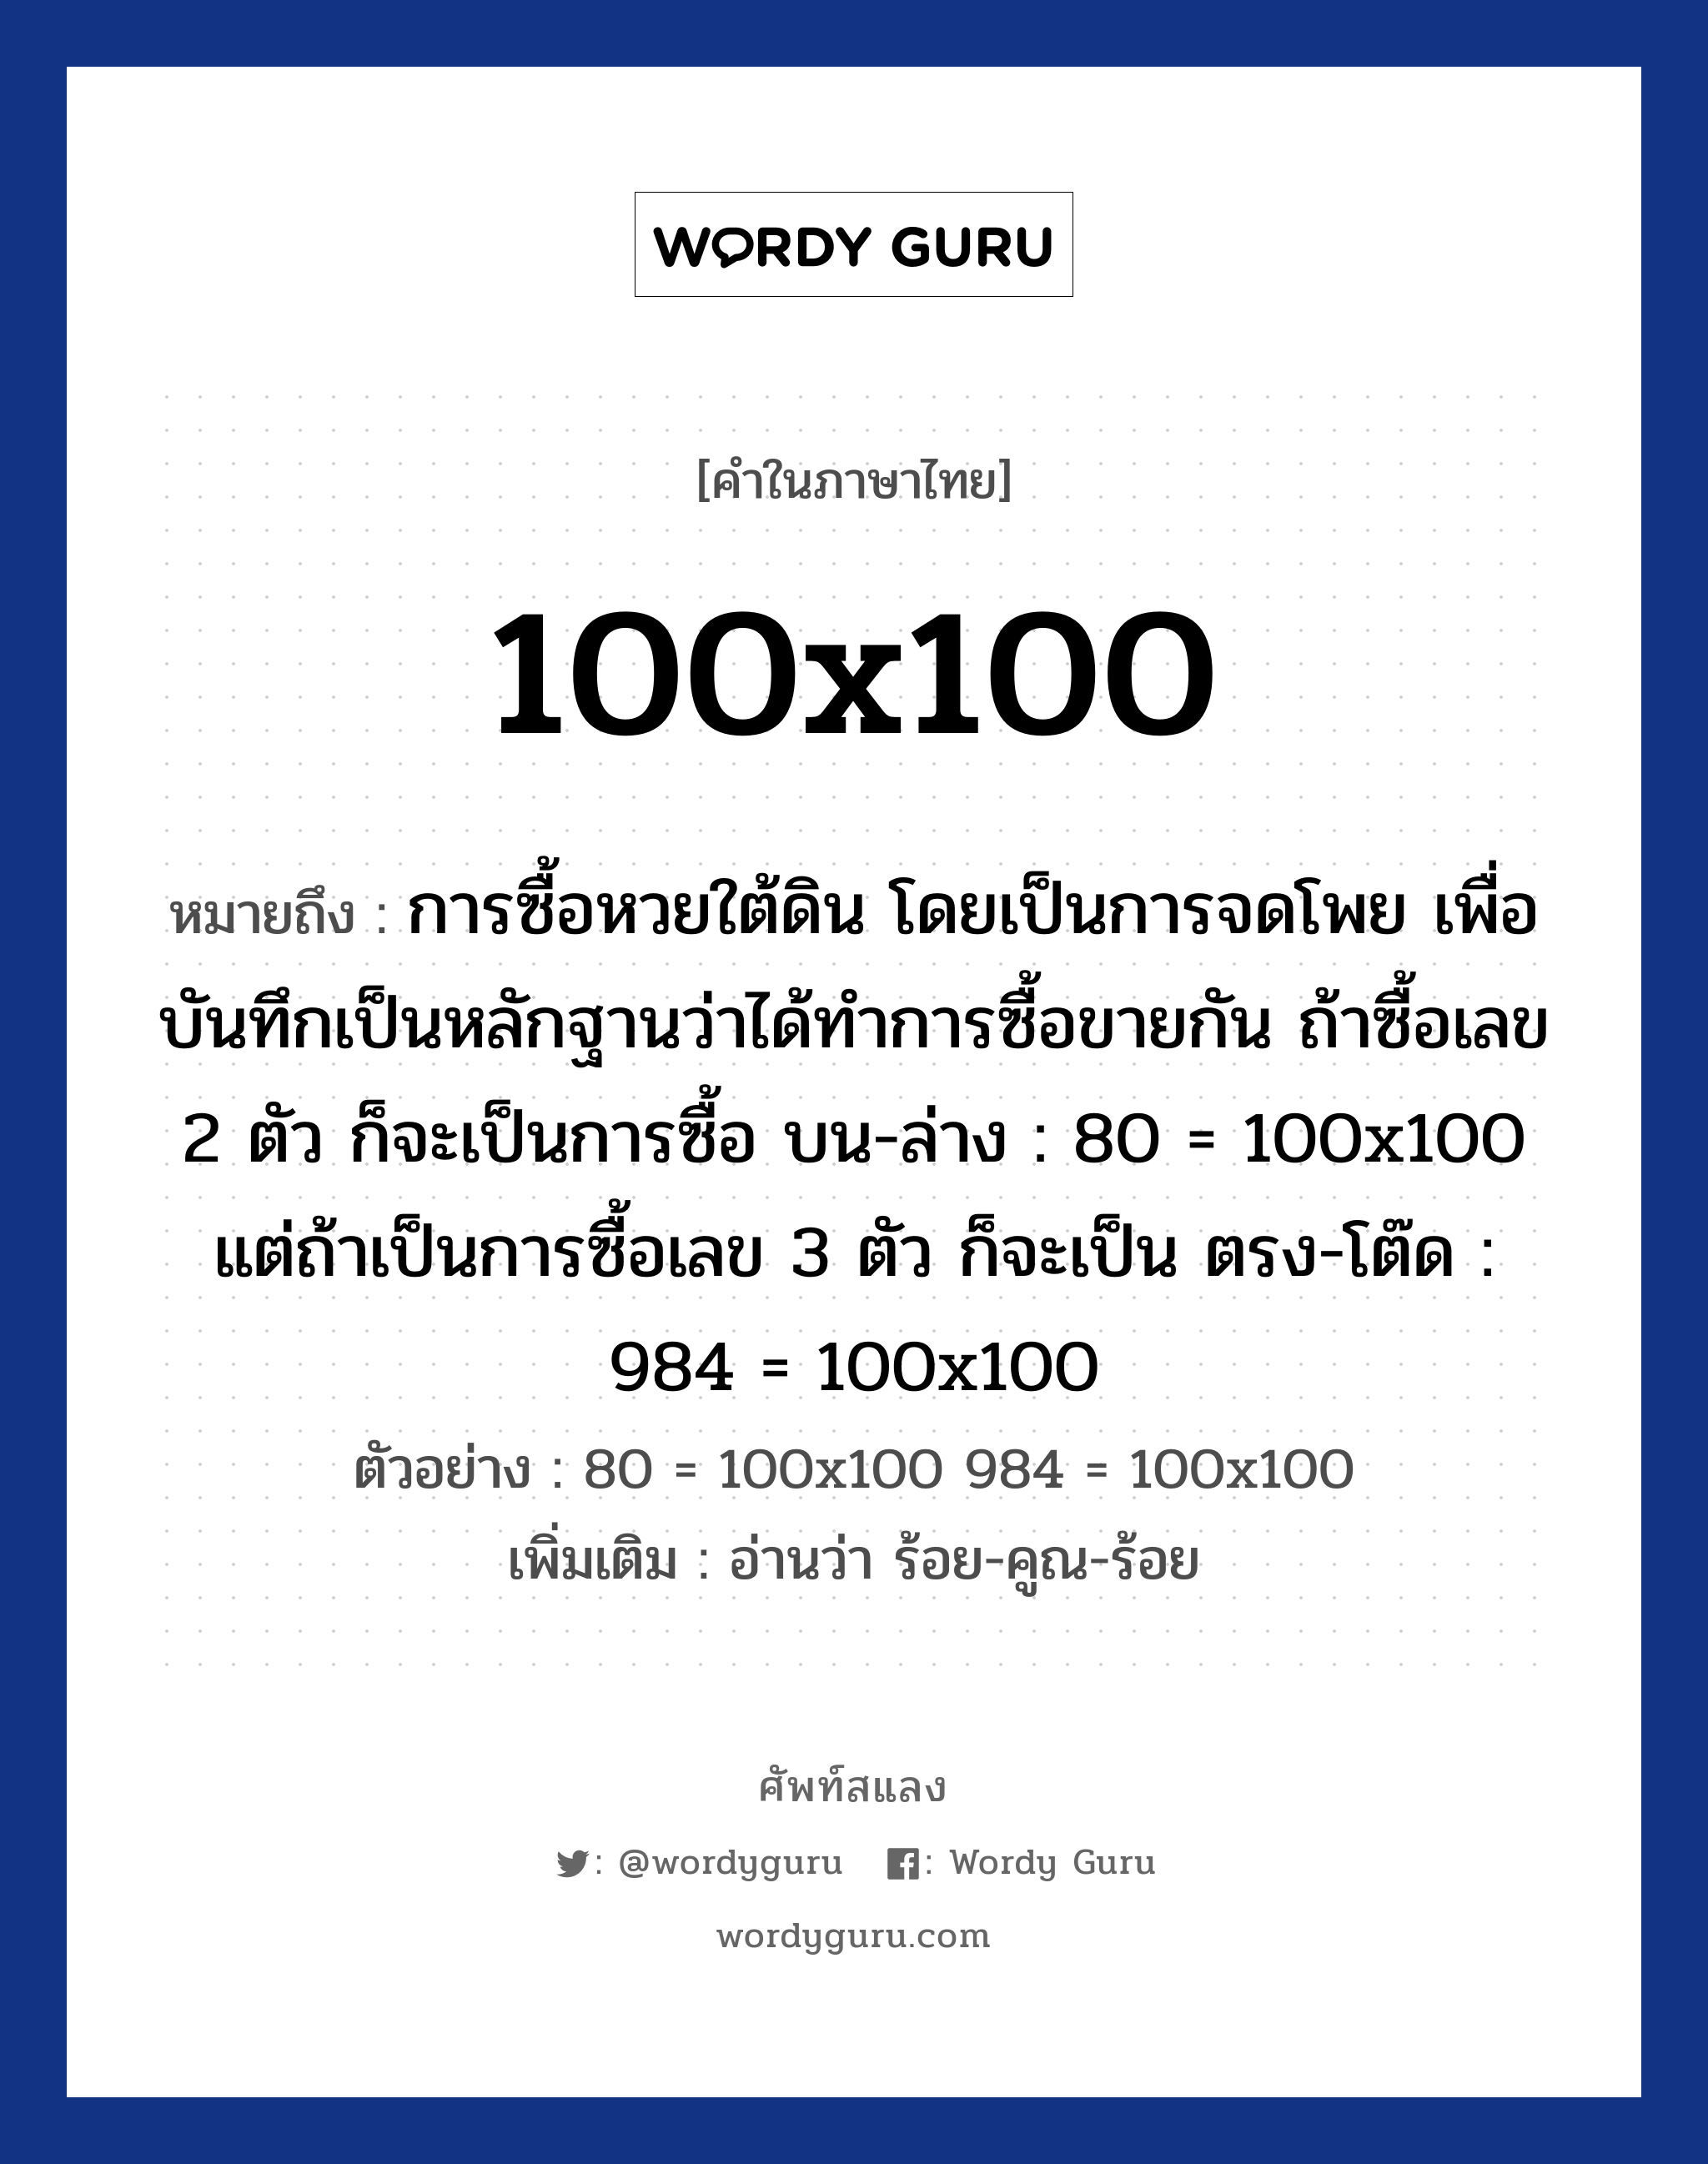 100x100 หมายถึงอะไร?, คำไทย 100x100 คำในภาษาไทย 100x100 หมายถึง การซื้อหวยใต้ดิน โดยเป็นการจดโพย เพื่อบันทึกเป็นหลักฐานว่าได้ทำการซื้อขายกัน ถ้าซื้อเลข 2 ตัว ก็จะเป็นการซื้อ บน-ล่าง : 80 = 100x100 แต่ถ้าเป็นการซื้อเลข 3 ตัว ก็จะเป็น ตรง-โต๊ด : 984 = 100x100 ตัวอย่าง 80 = 100x100 984 = 100x100 เพิ่มเติม อ่านว่า ร้อย-คูณ-ร้อย